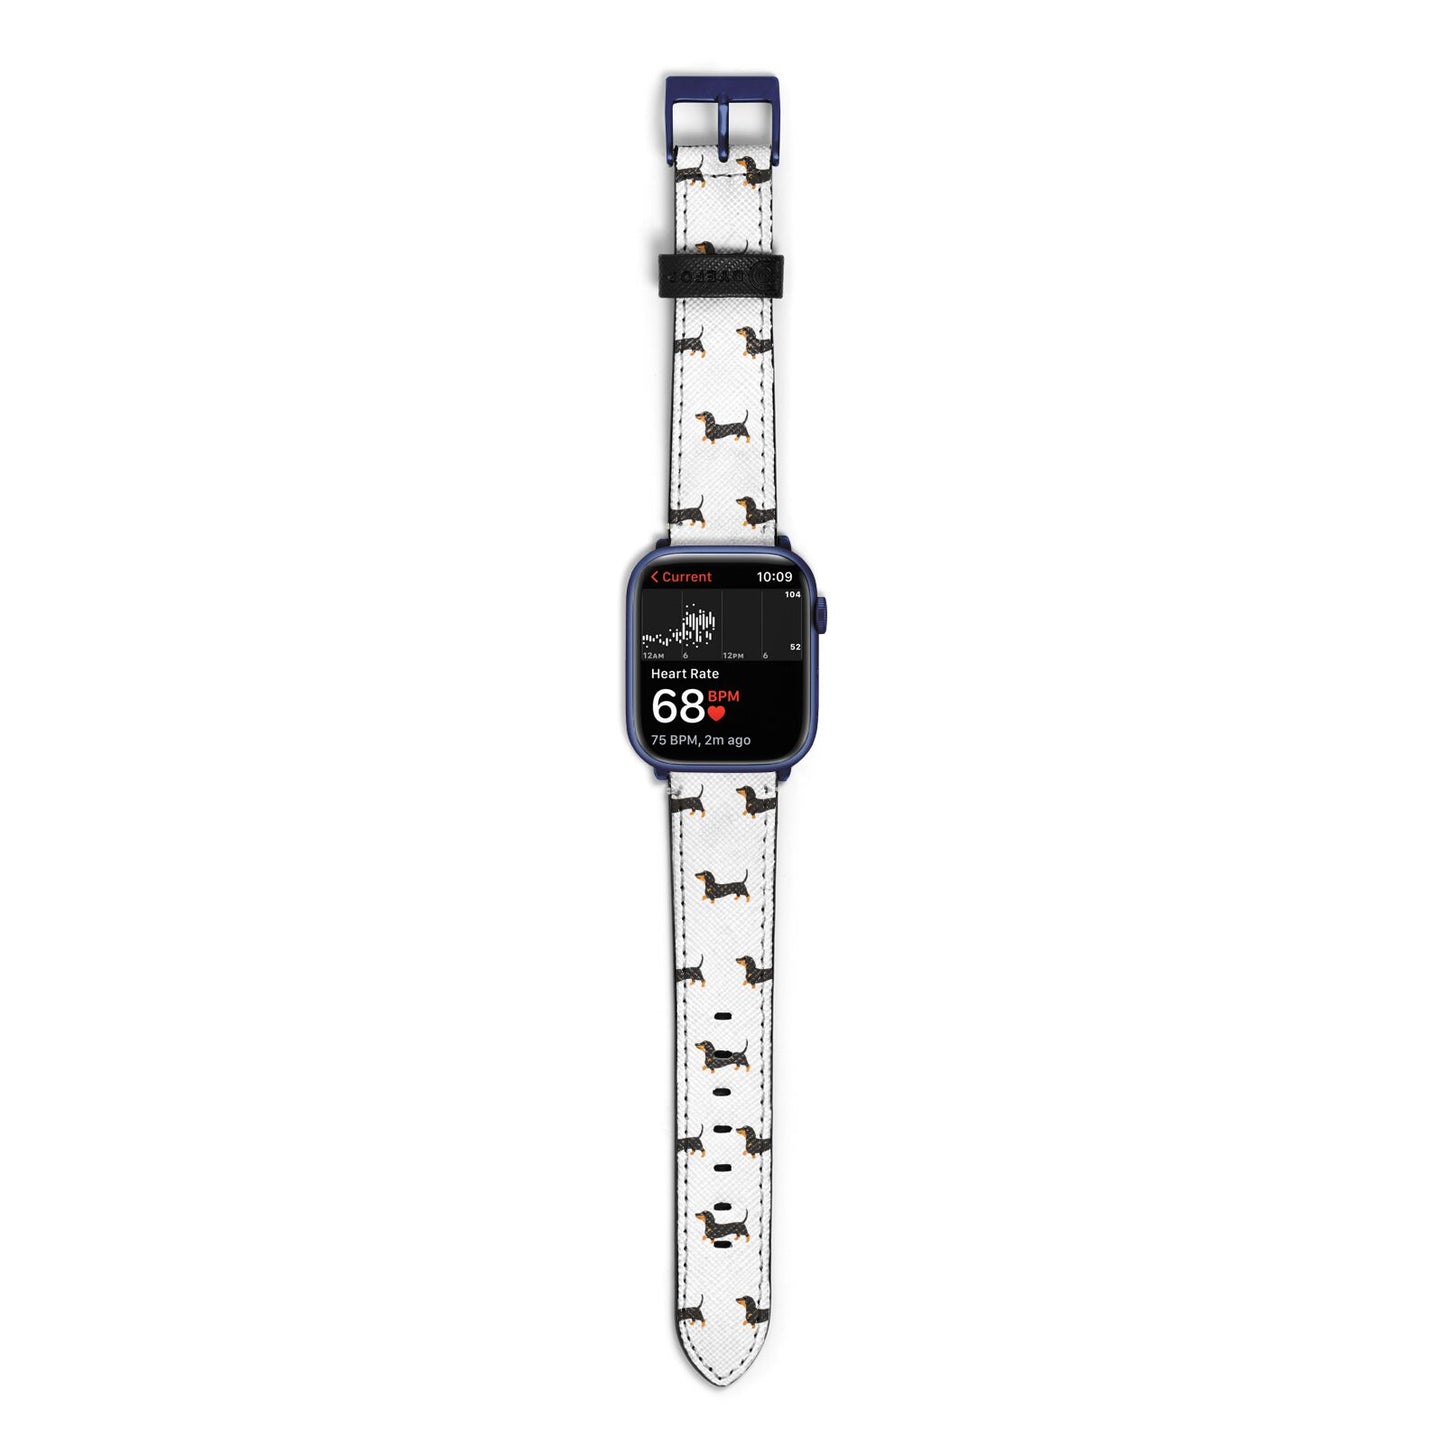 Dachshund Apple Watch Strap Size 38mm with Blue Hardware